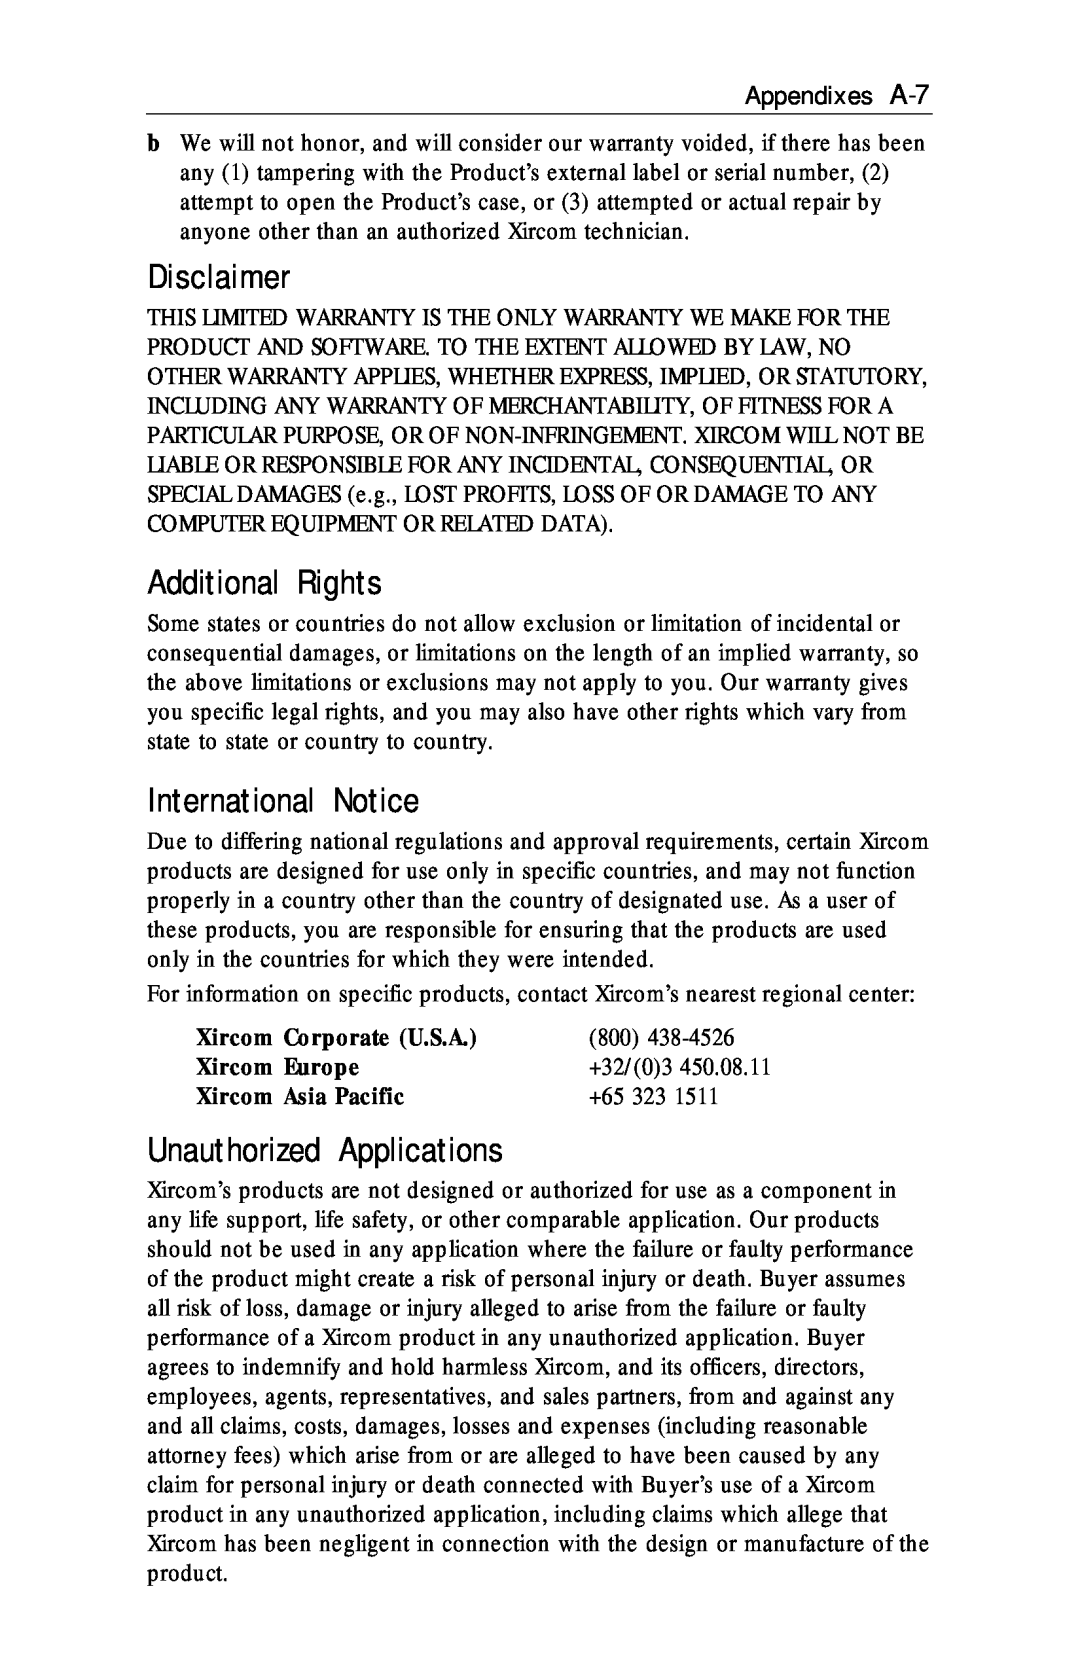 Xircom RM56V1 Disclaimer, Additional Rights, International Notice, Unauthorized Applications, Xircom Corporate U.S.A, +65 